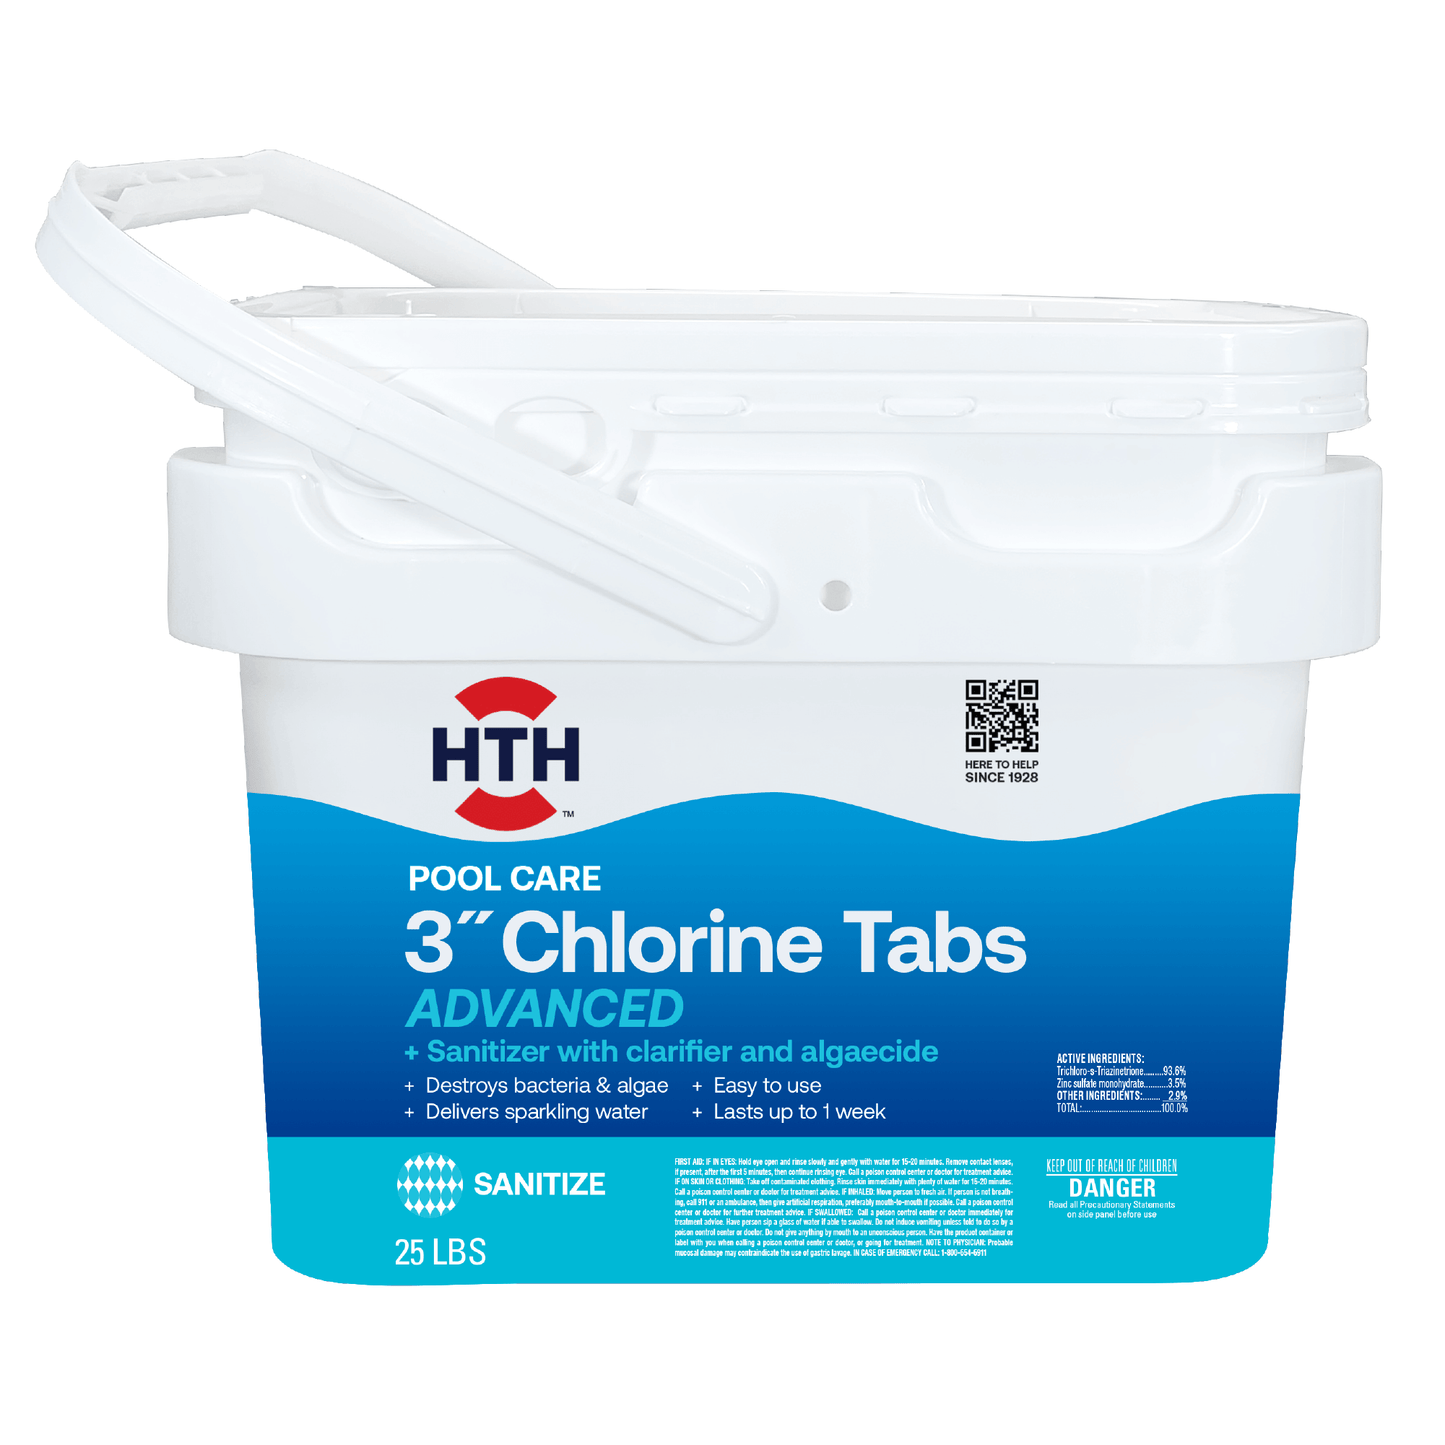 HTH™ Pool Care 3" Chlorine Tabs Advanced: Chlorine Tab